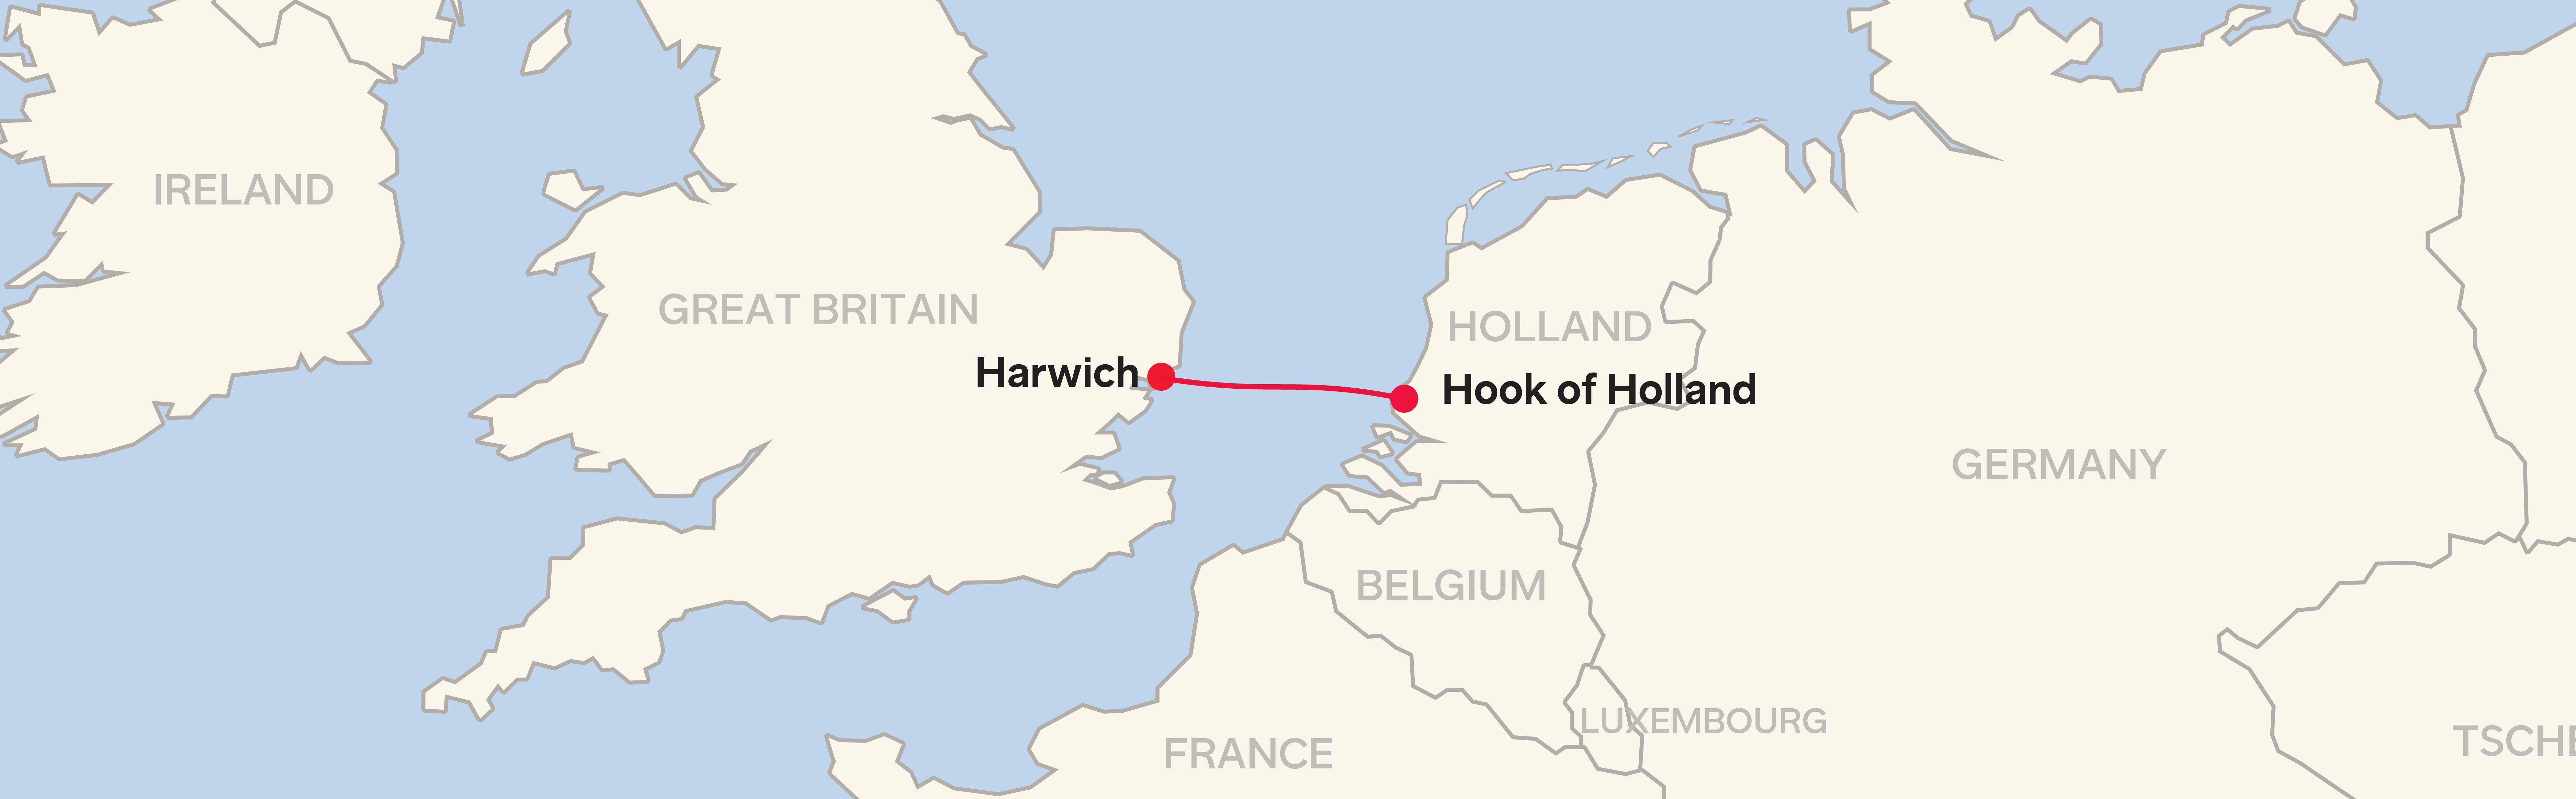 stena-line-routemap-harwich-hook-of-holland.jpg